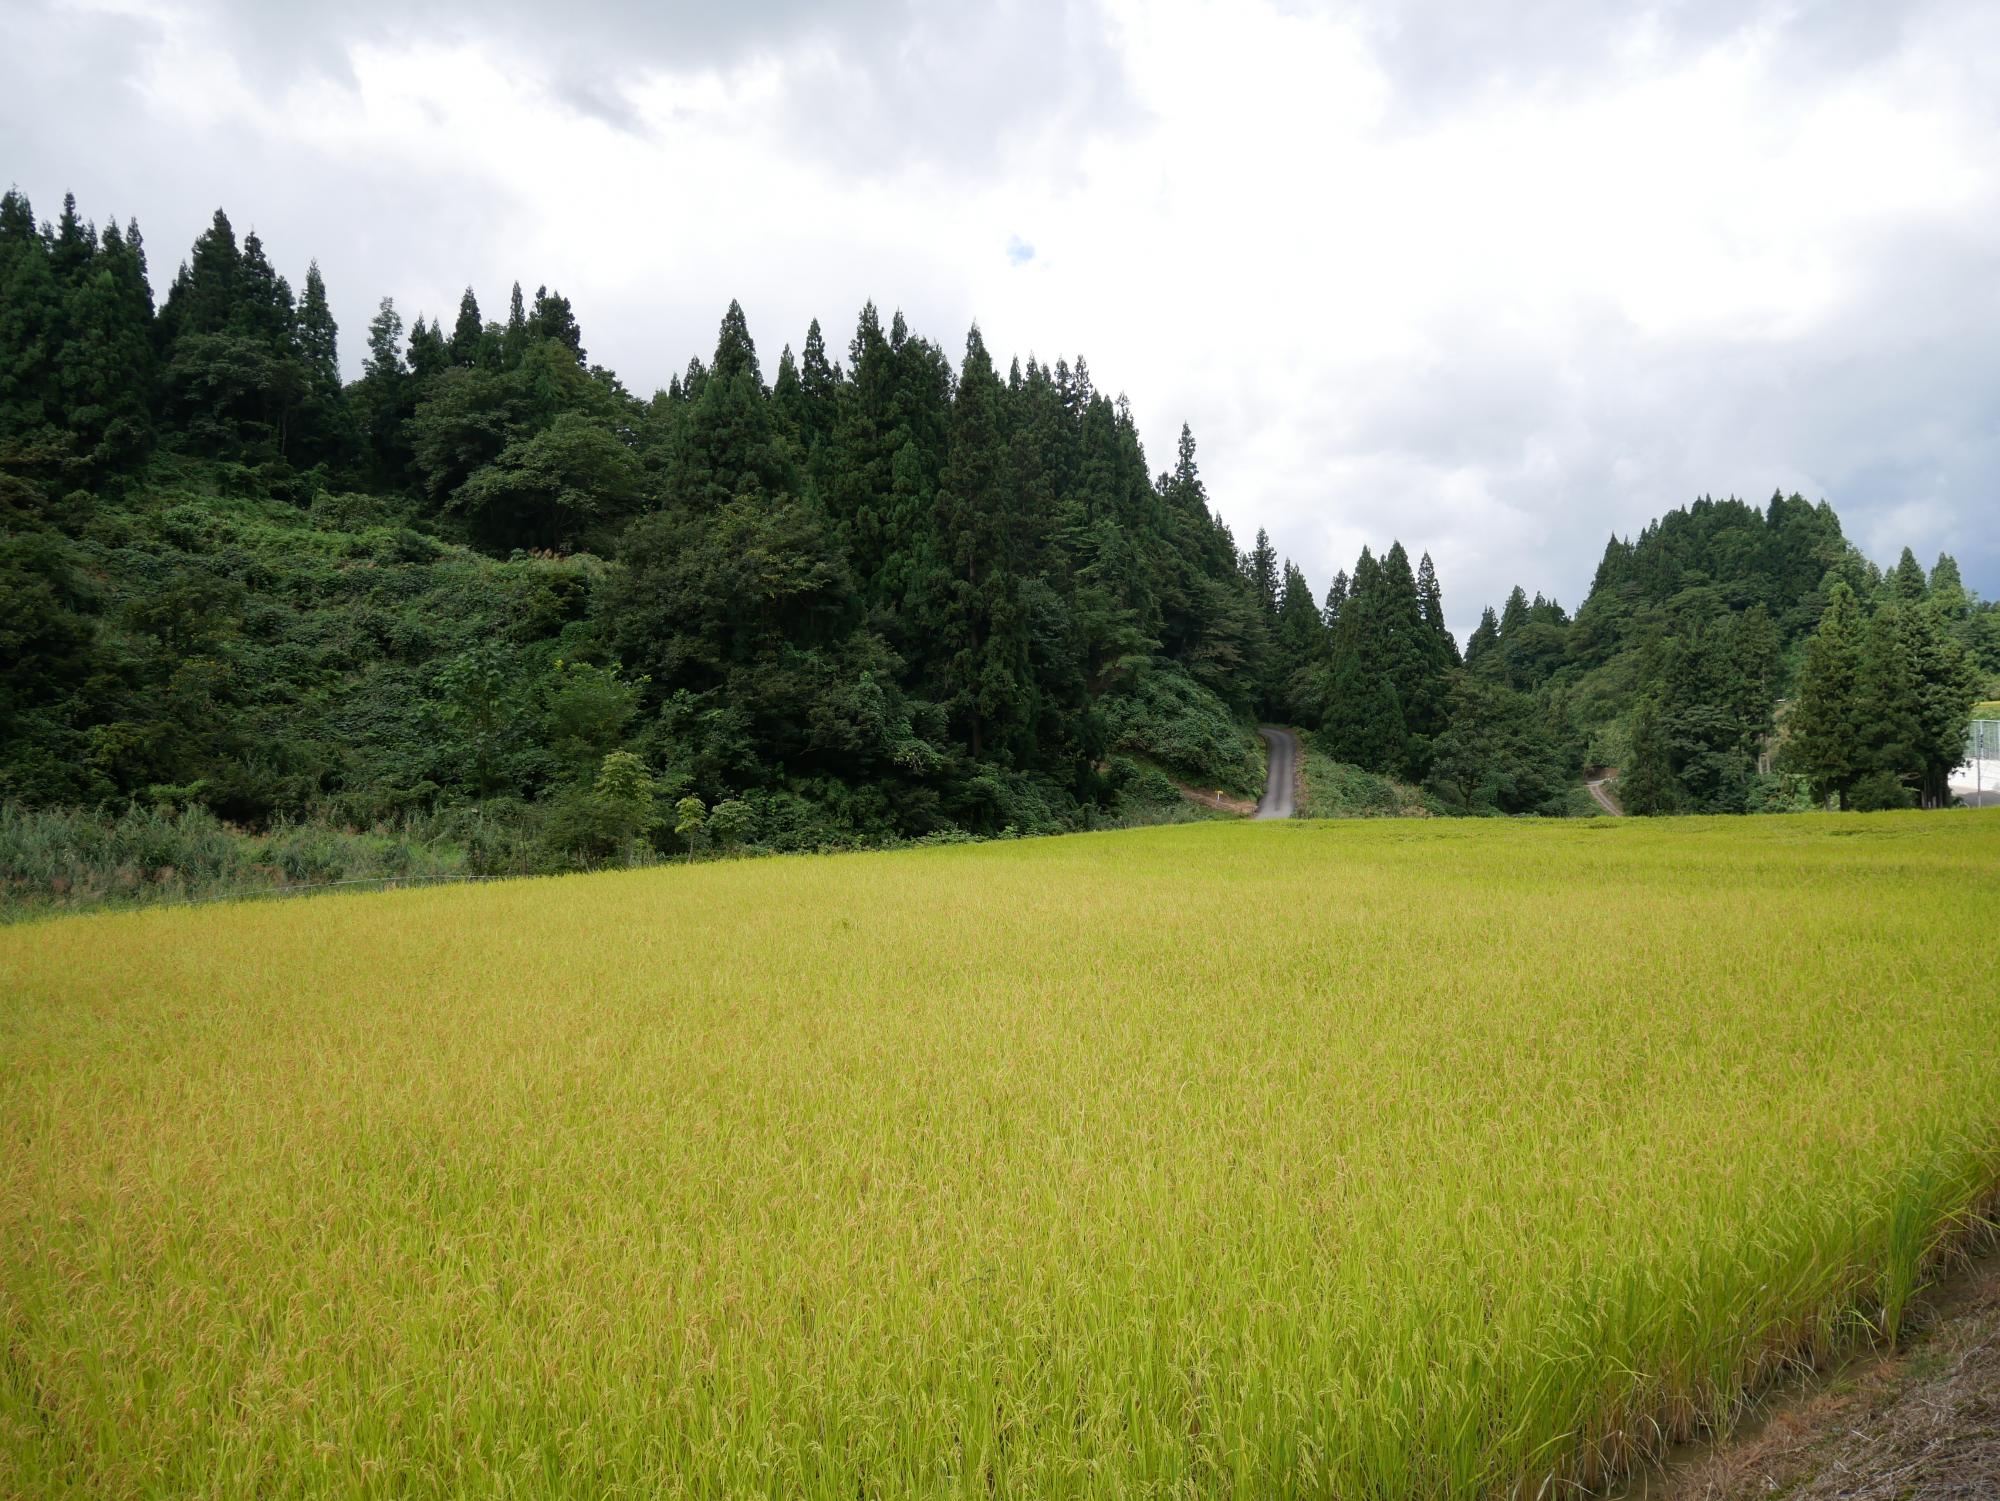 Harvesting Season for Sakamai